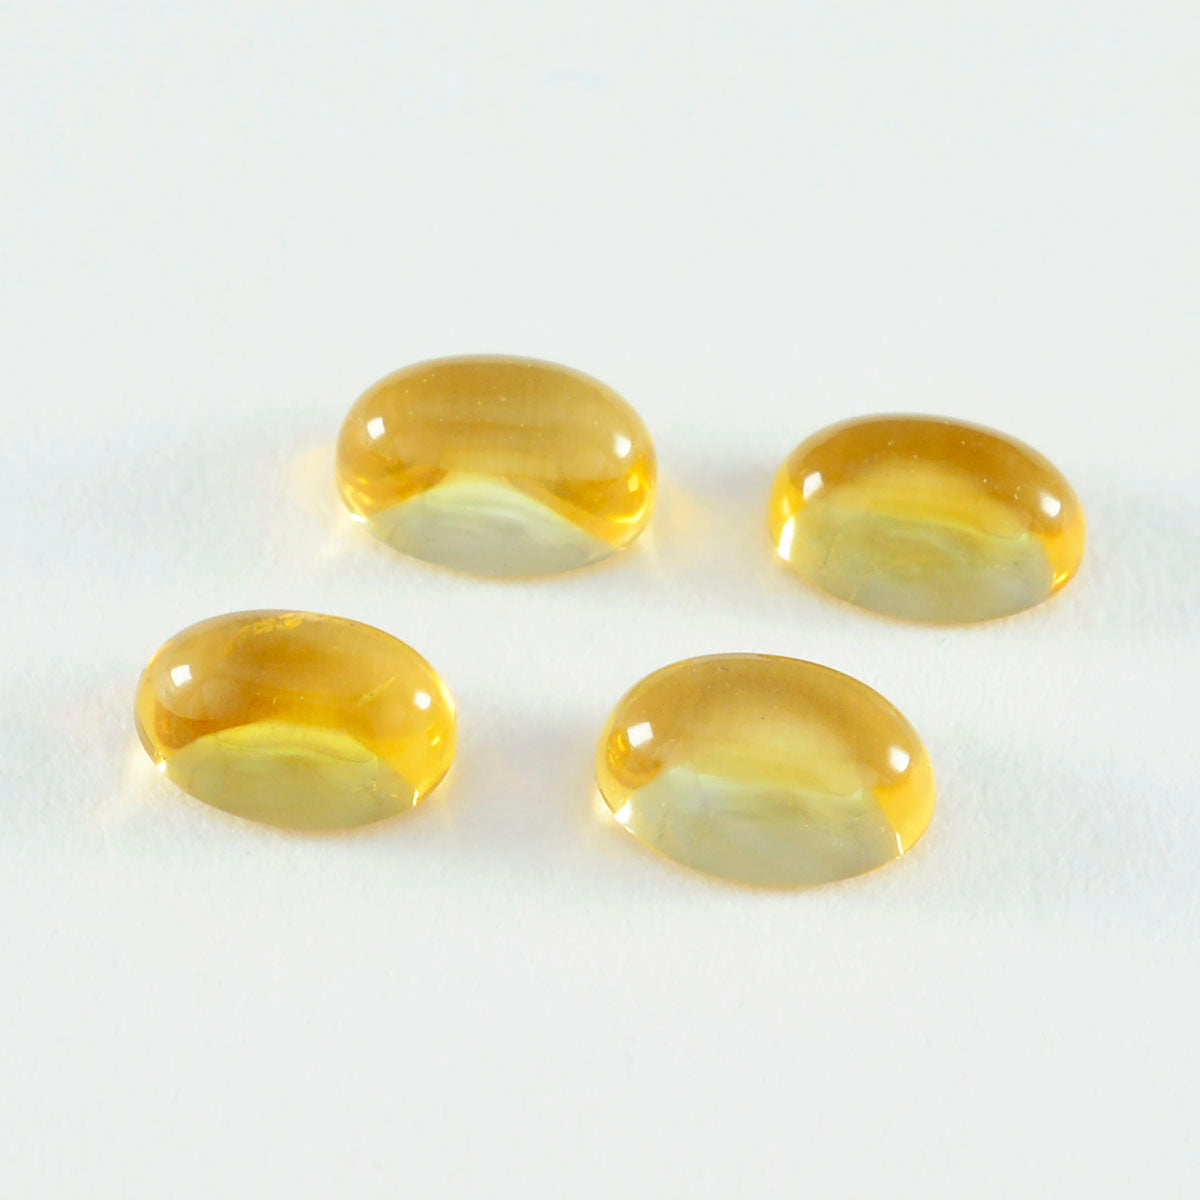 Riyogems 1PC gele citrien cabochon 7x9 mm ovale vorm, mooie kwaliteitsedelstenen